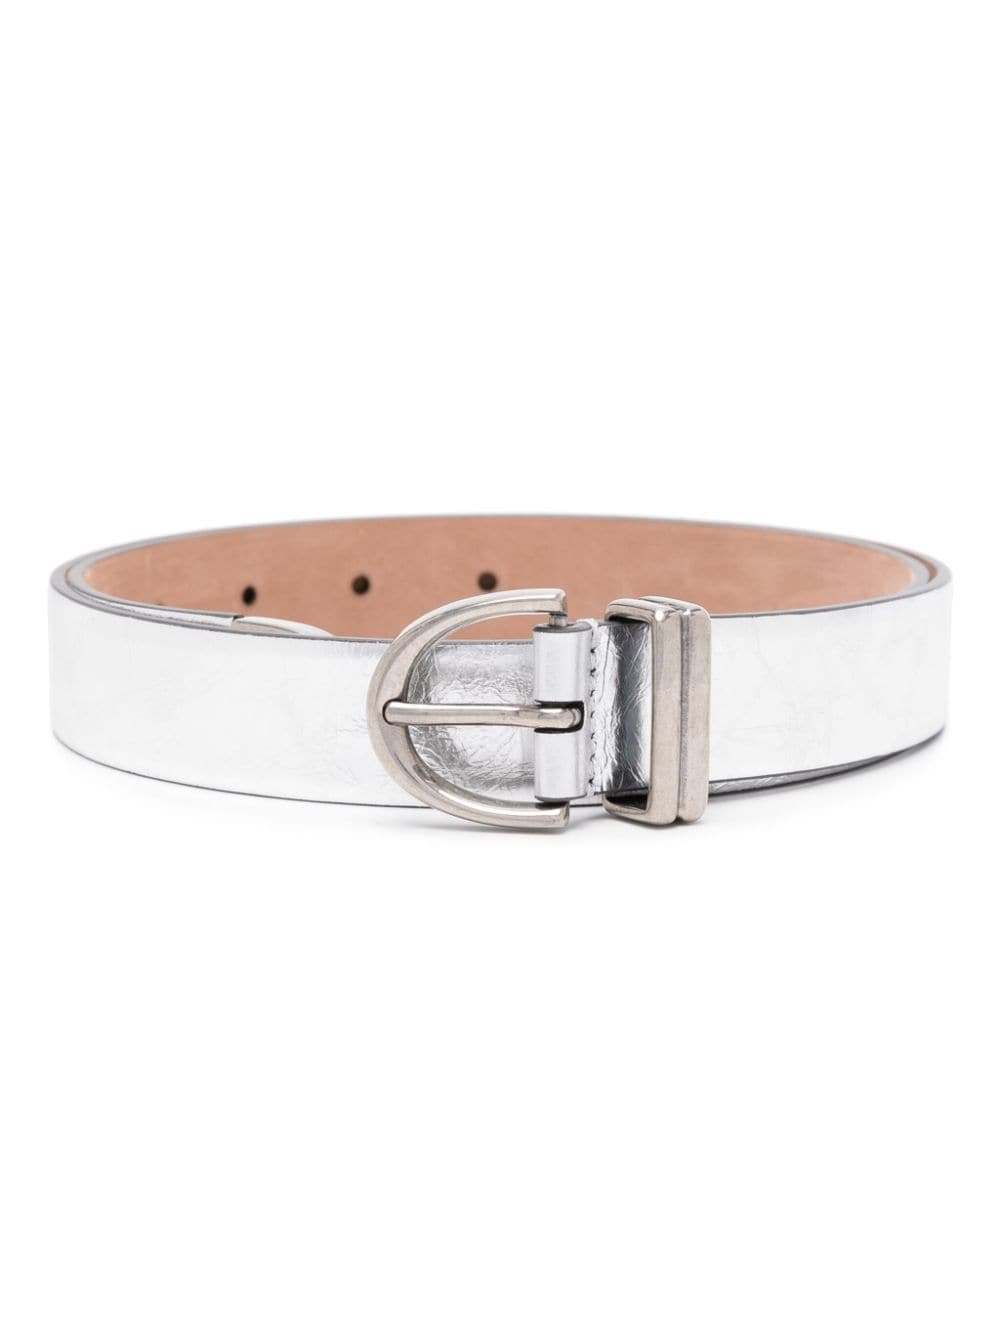 patent-finish leather belt